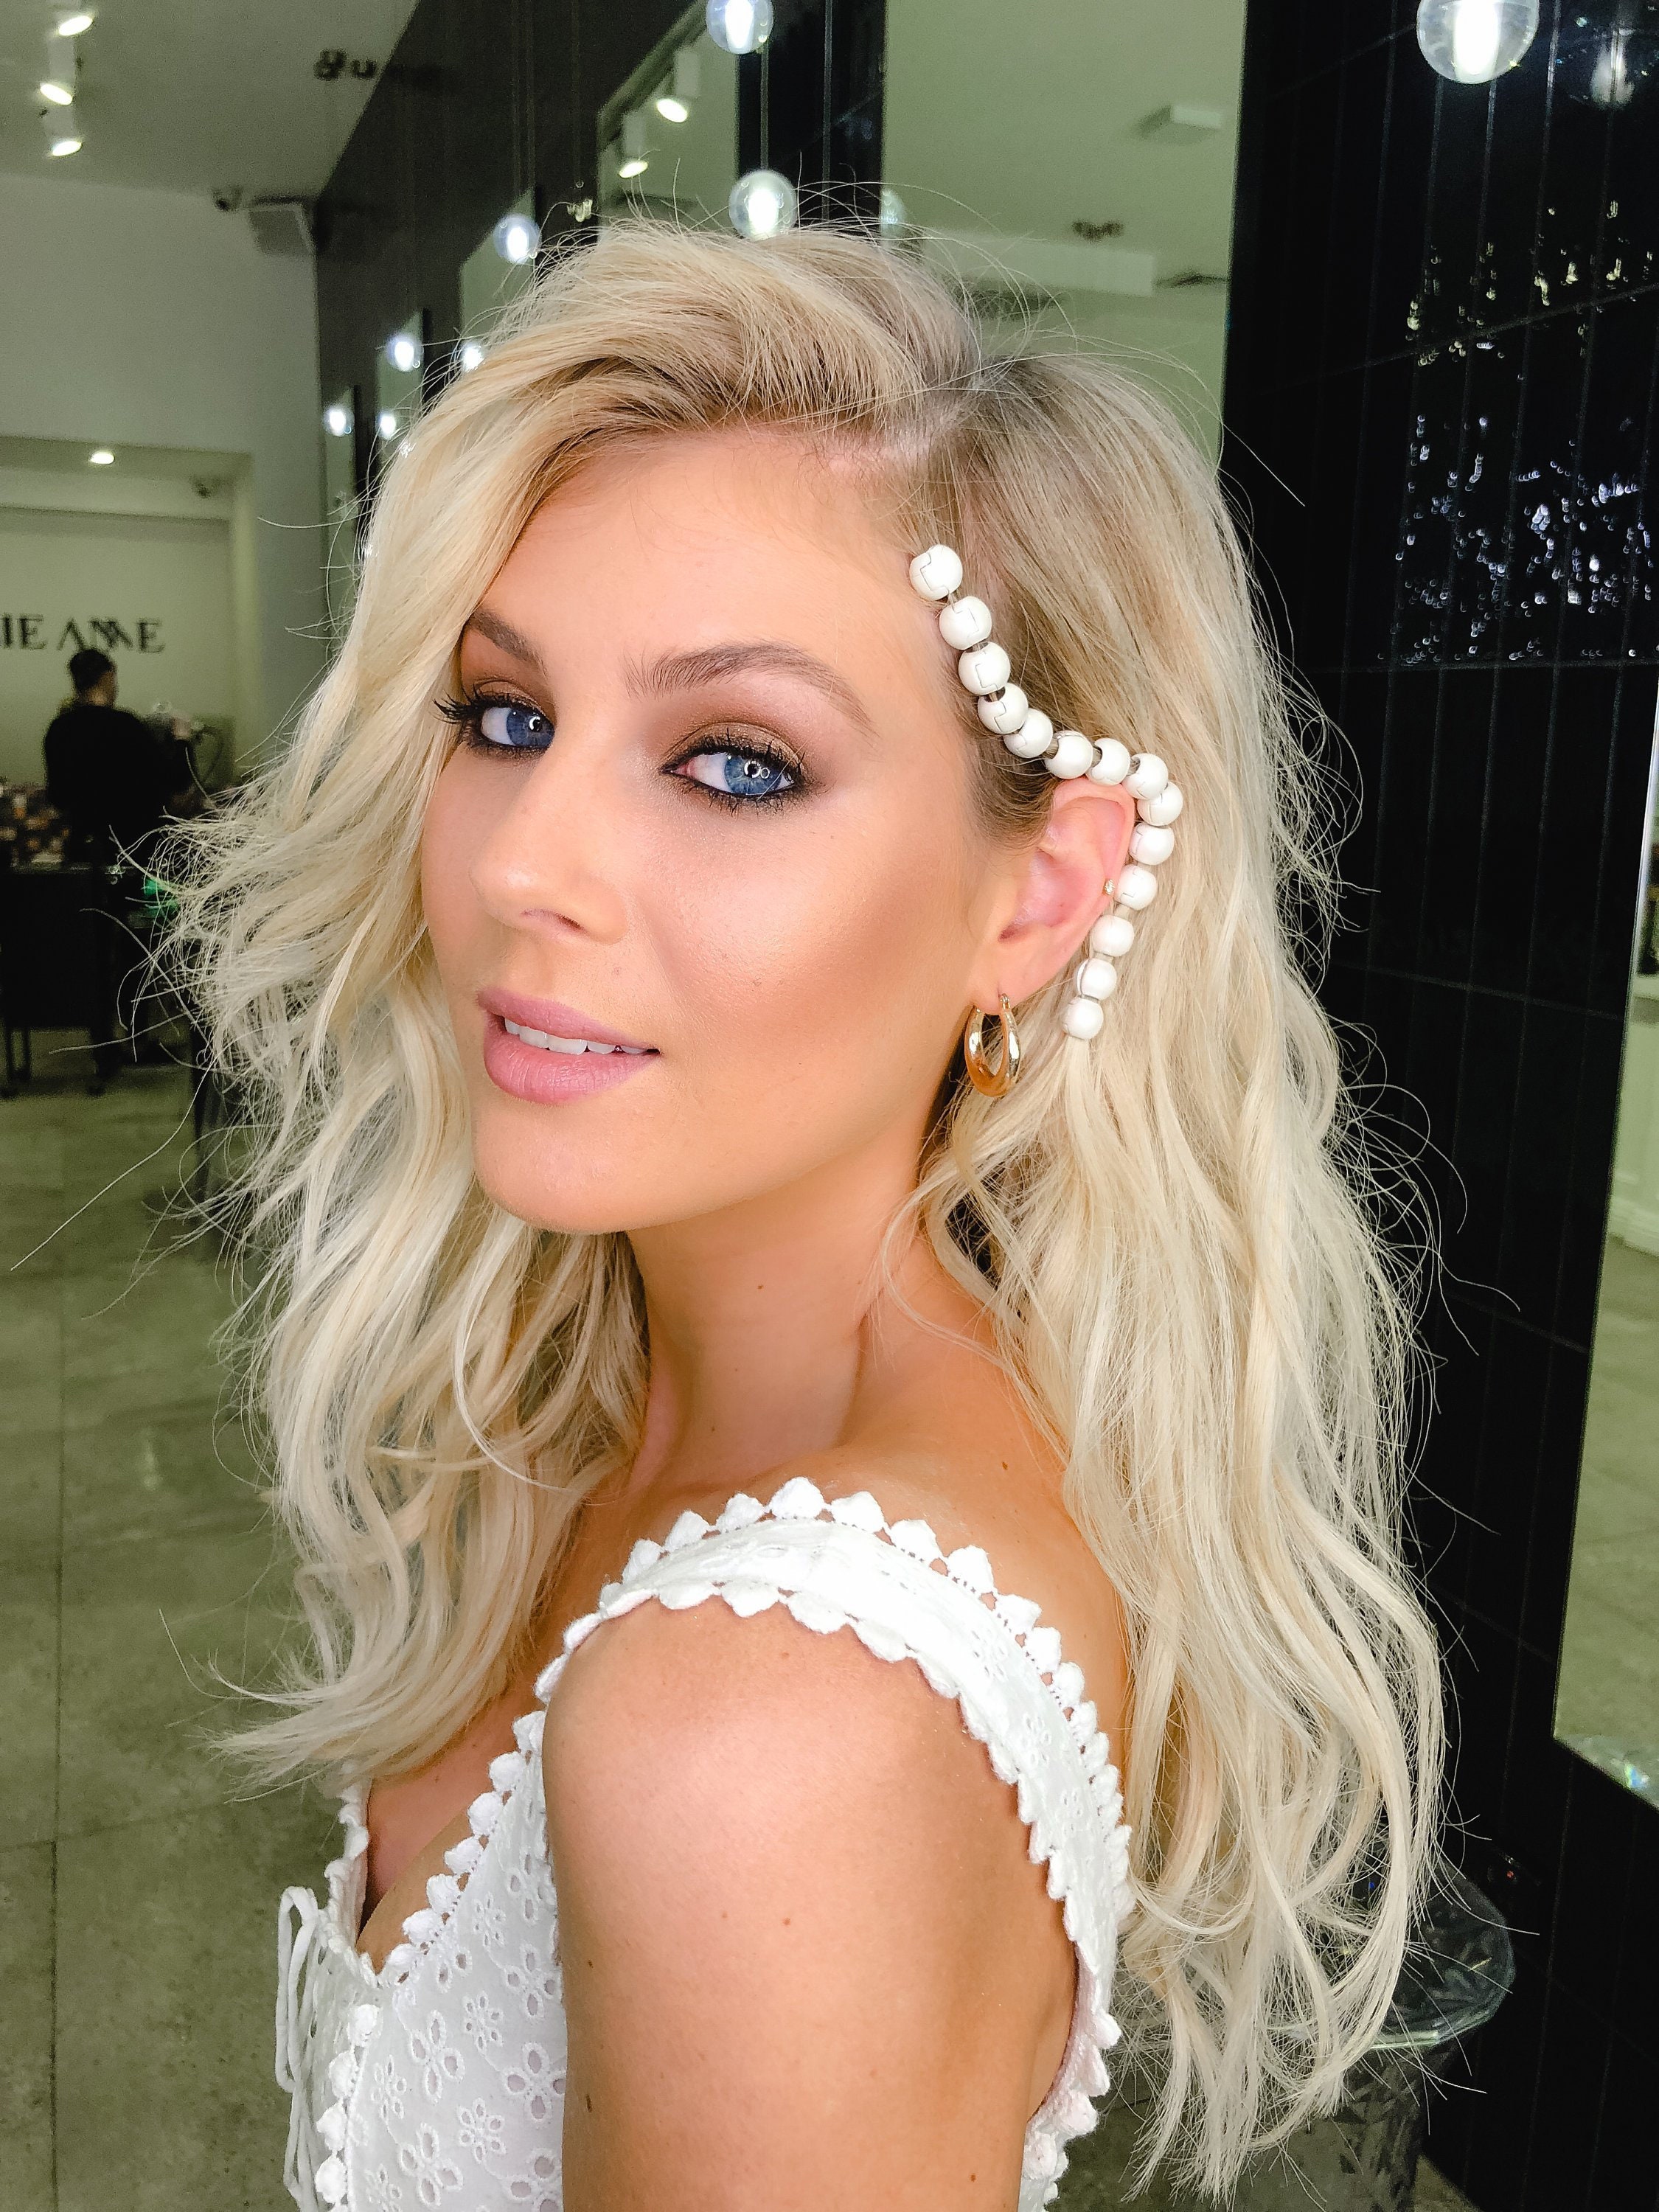 Charm Imitation Pearl Bride Headband Bridal Hair Jewelry Accessories Headwe  BO